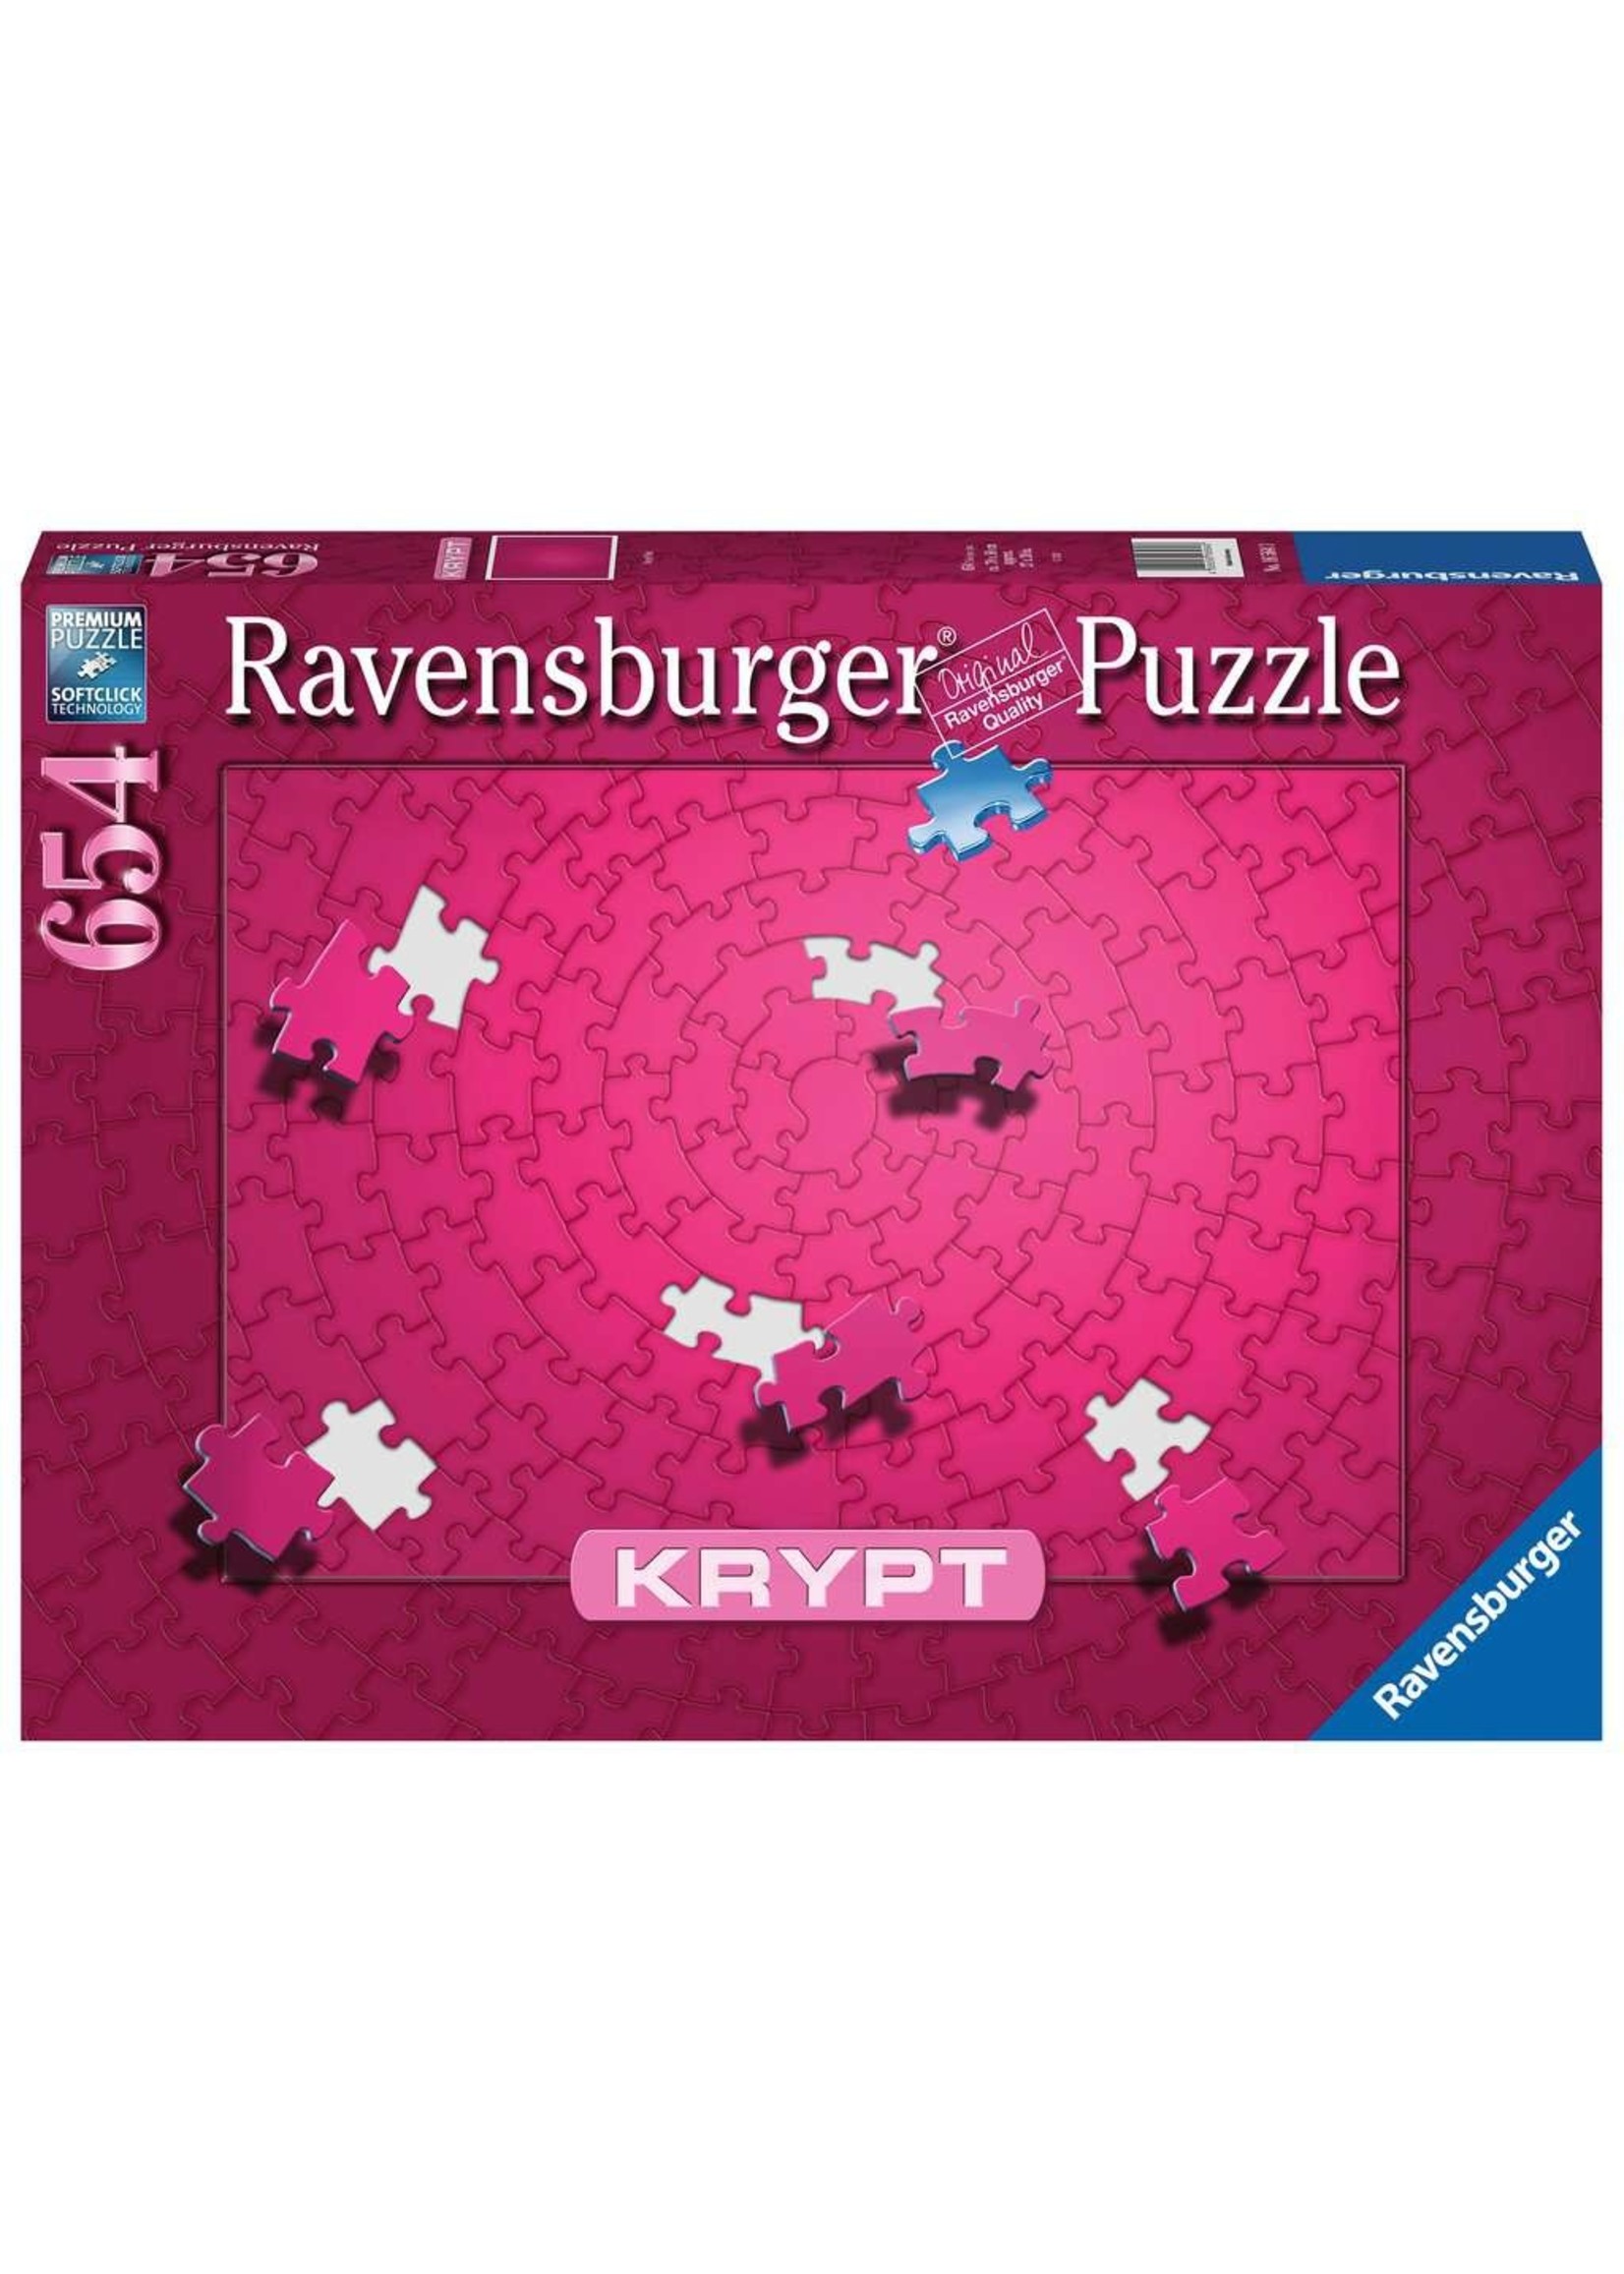 Ravensburger Krypt - Pink